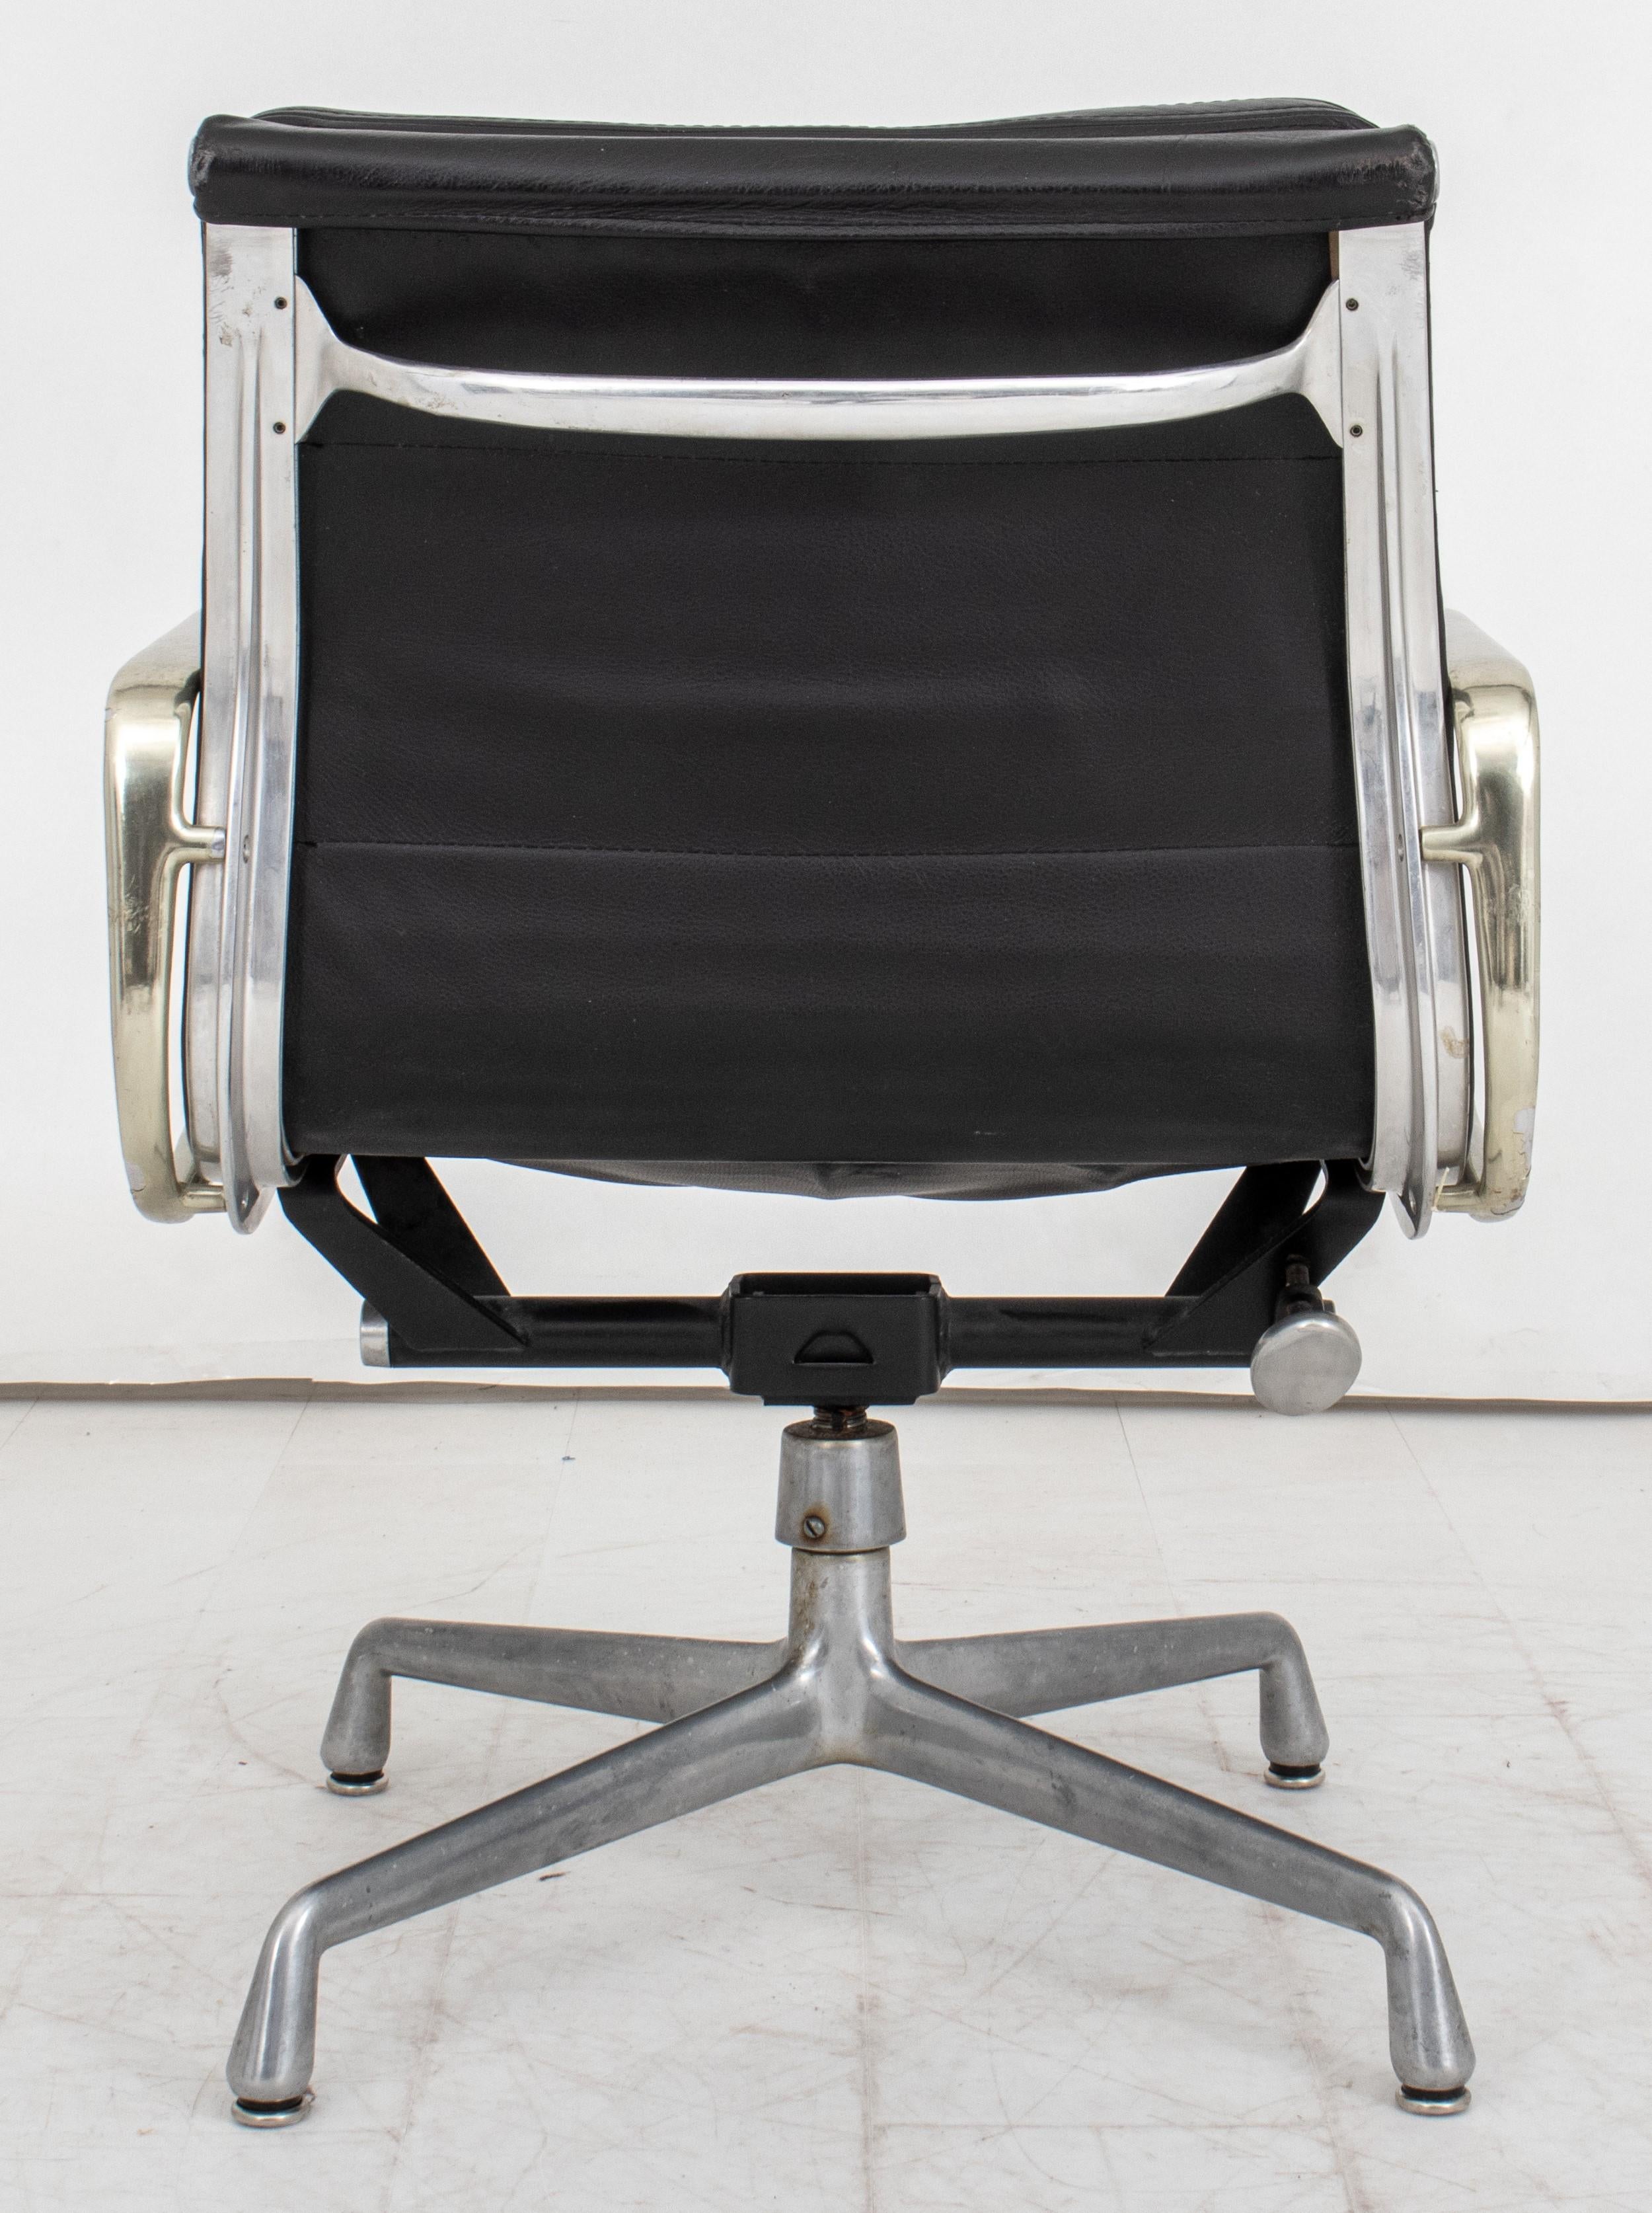 Eames x Miller Soft Pad  Aluminum Executive Chair;
Dimensions:31